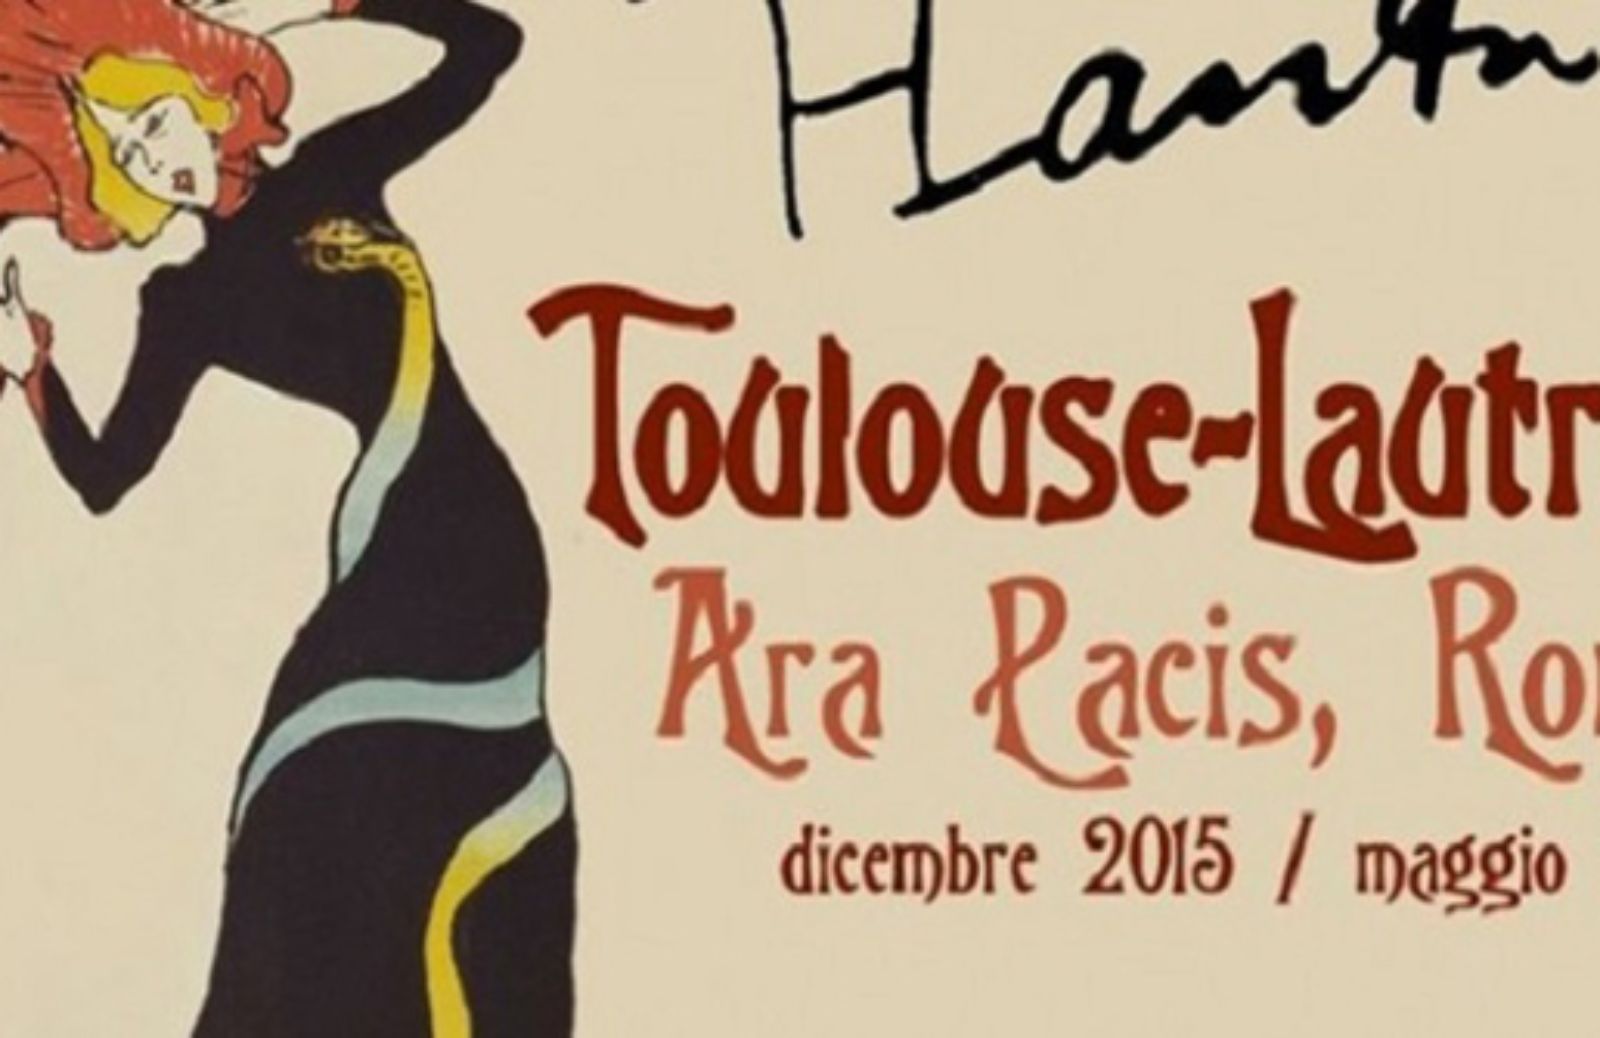 Toulouse-Lautrec all'Ara Pacis di Roma